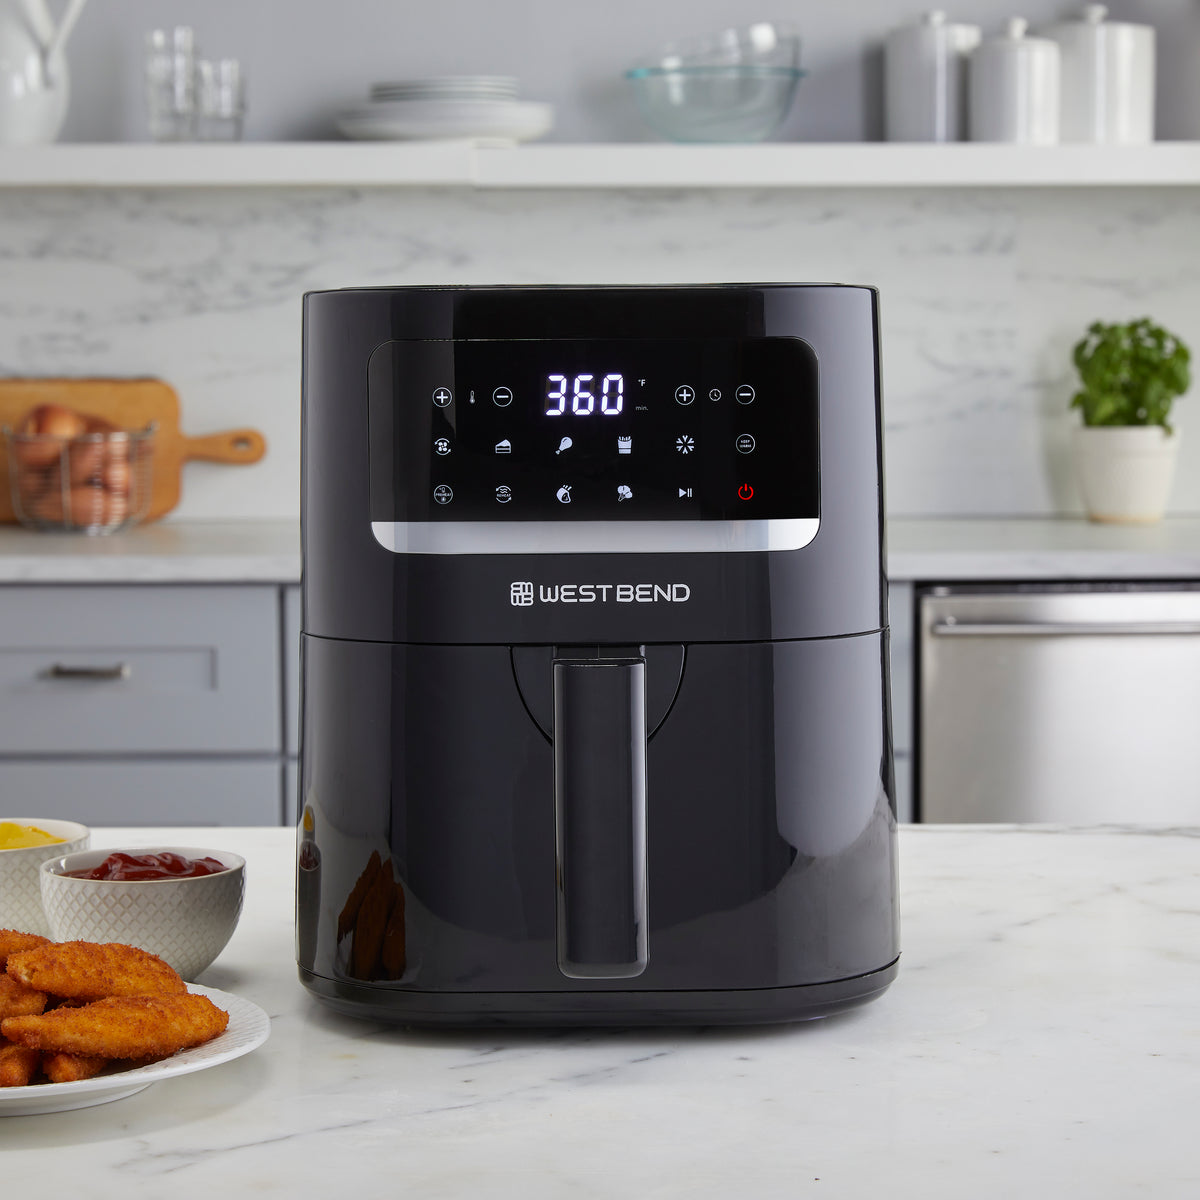 Taotronics 13 Quart Air Fryer Review - Daring Kitchen